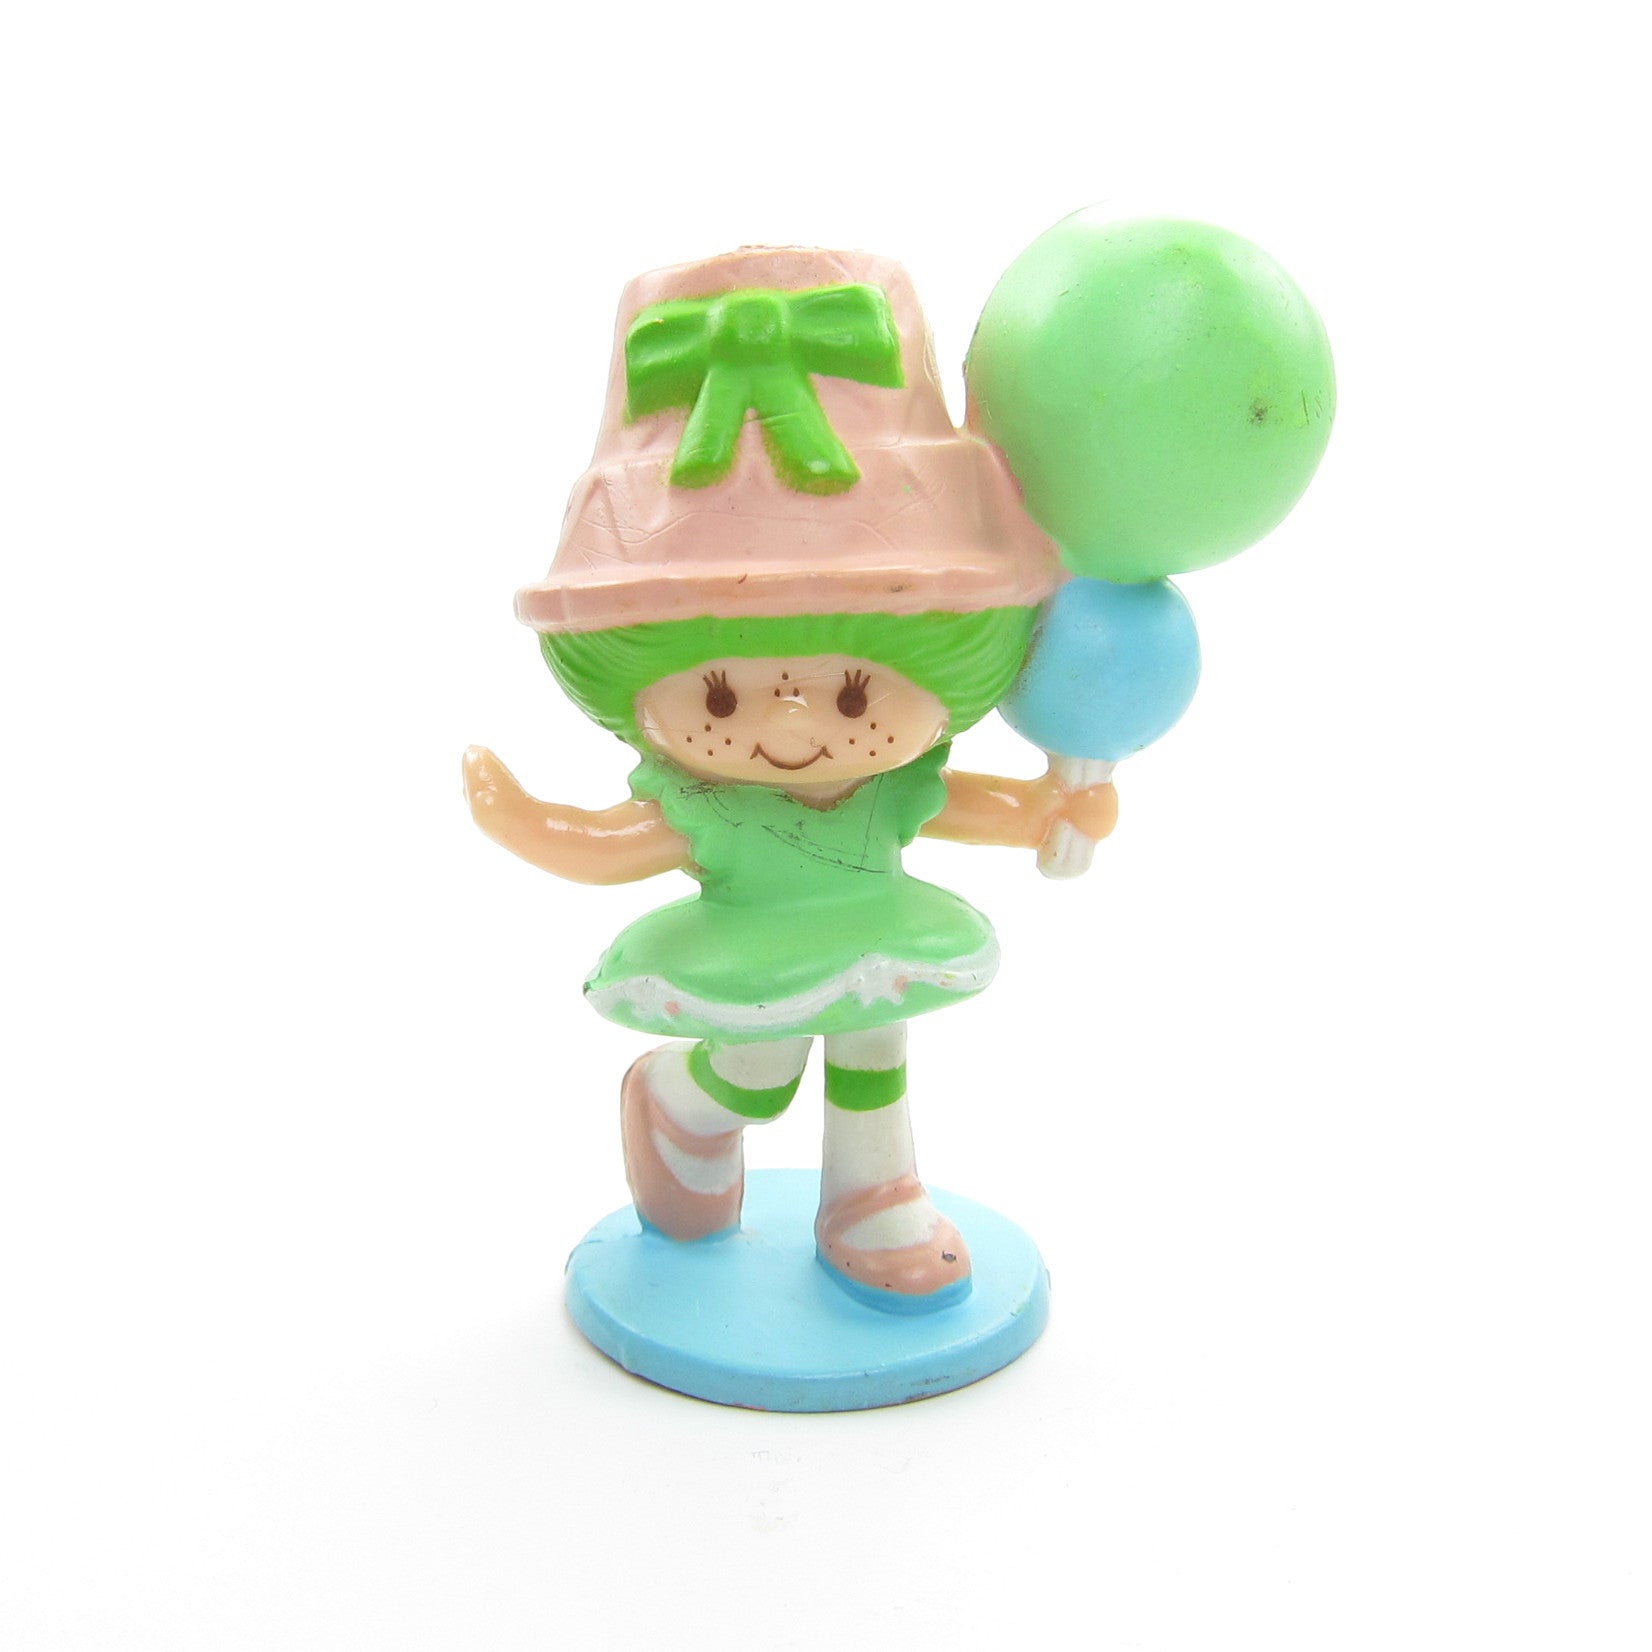 Lime Chiffon with Balloons miniature figurine